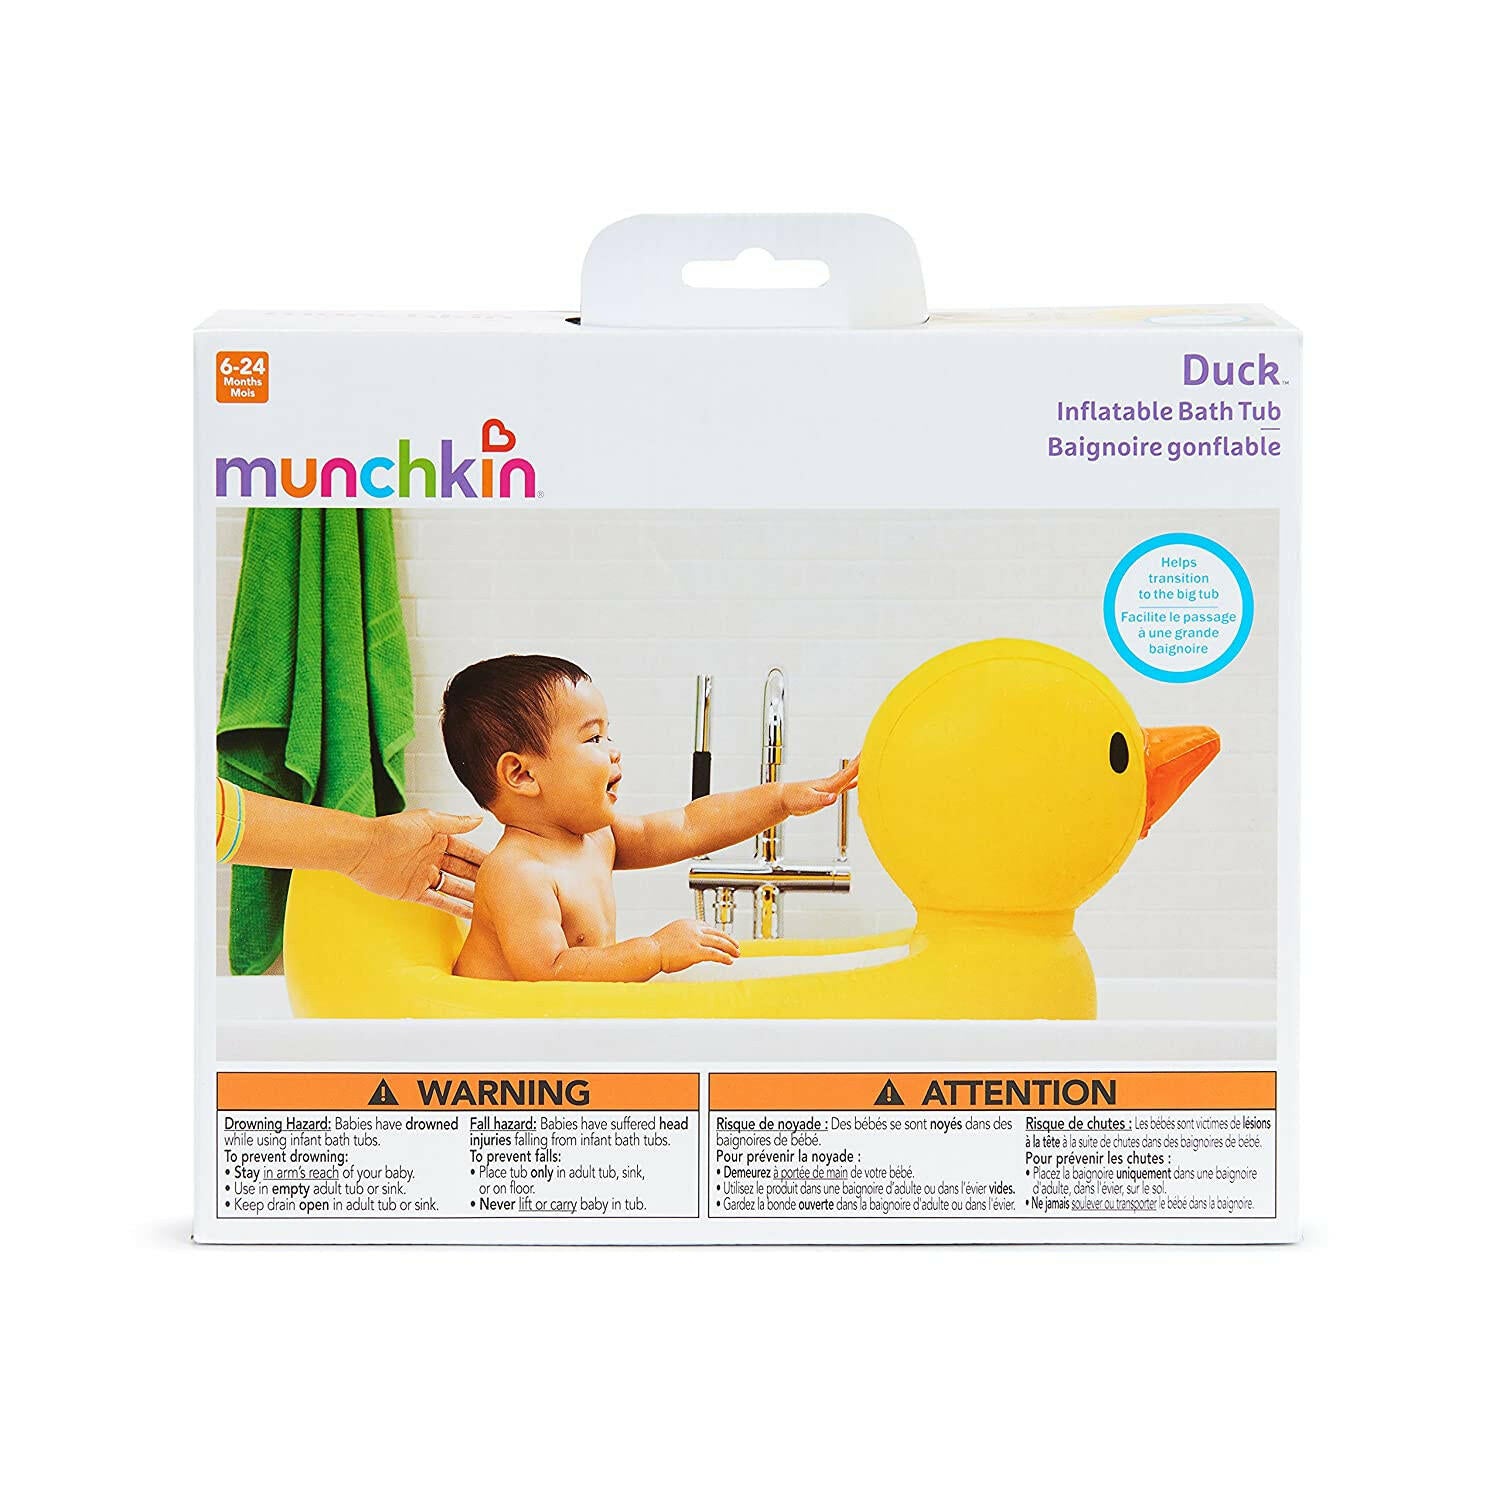 Munchkin Duck Inflatable Baby Bathtub with White Hot Heat Alert.